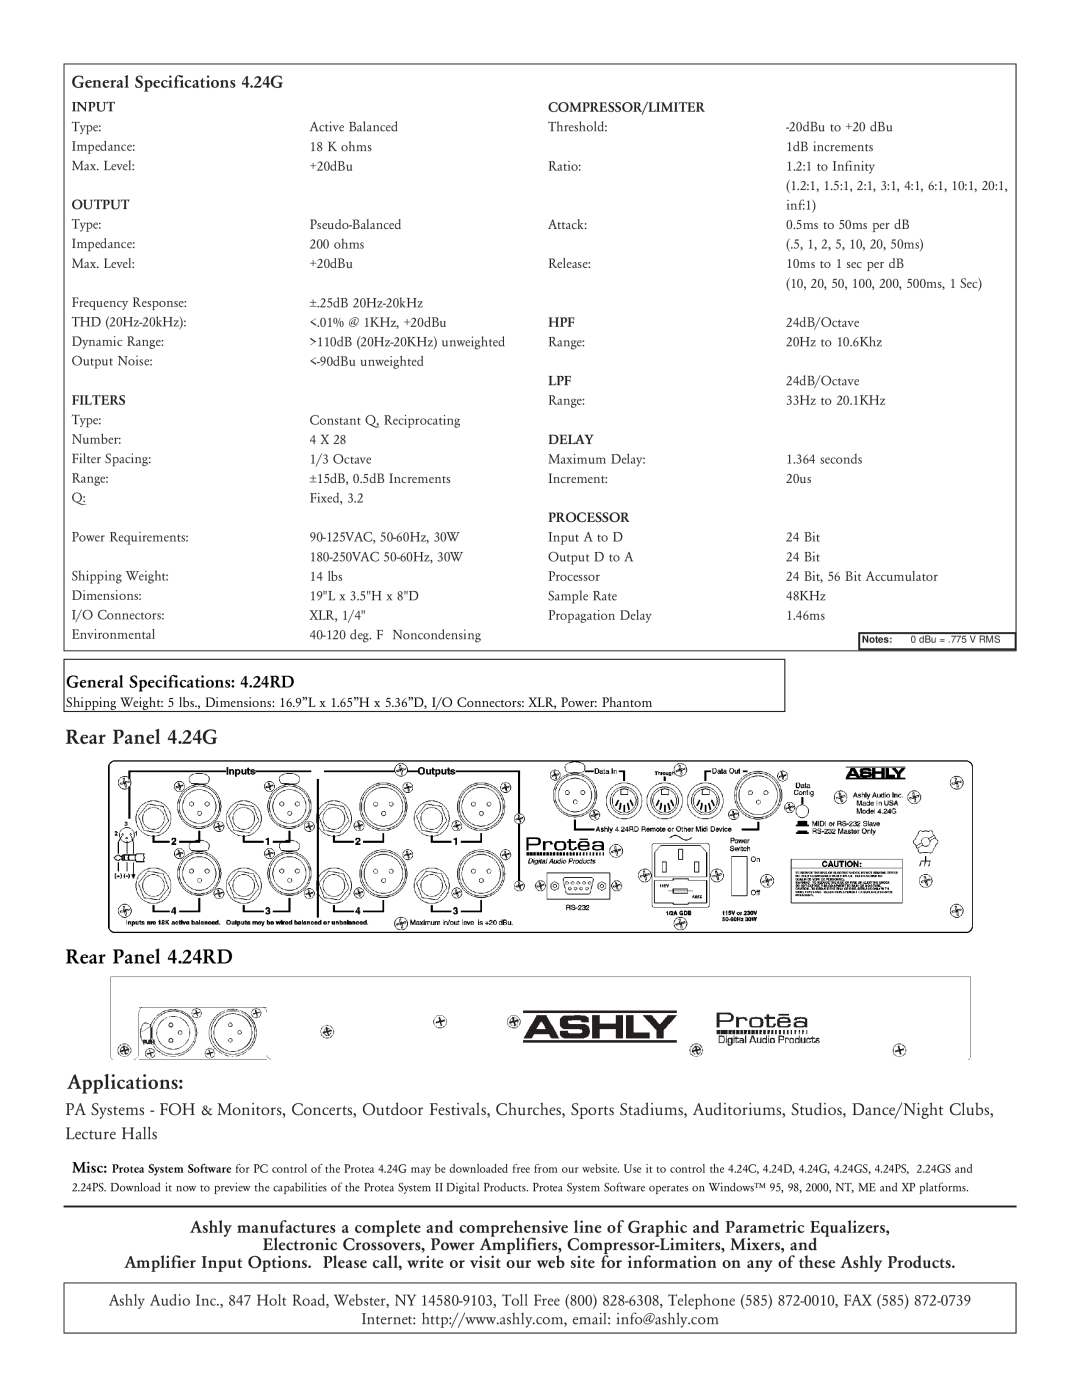 Ashly II 4.24G specifications Rear Panel 4.24G Rear Panel 4.24RD Applications 